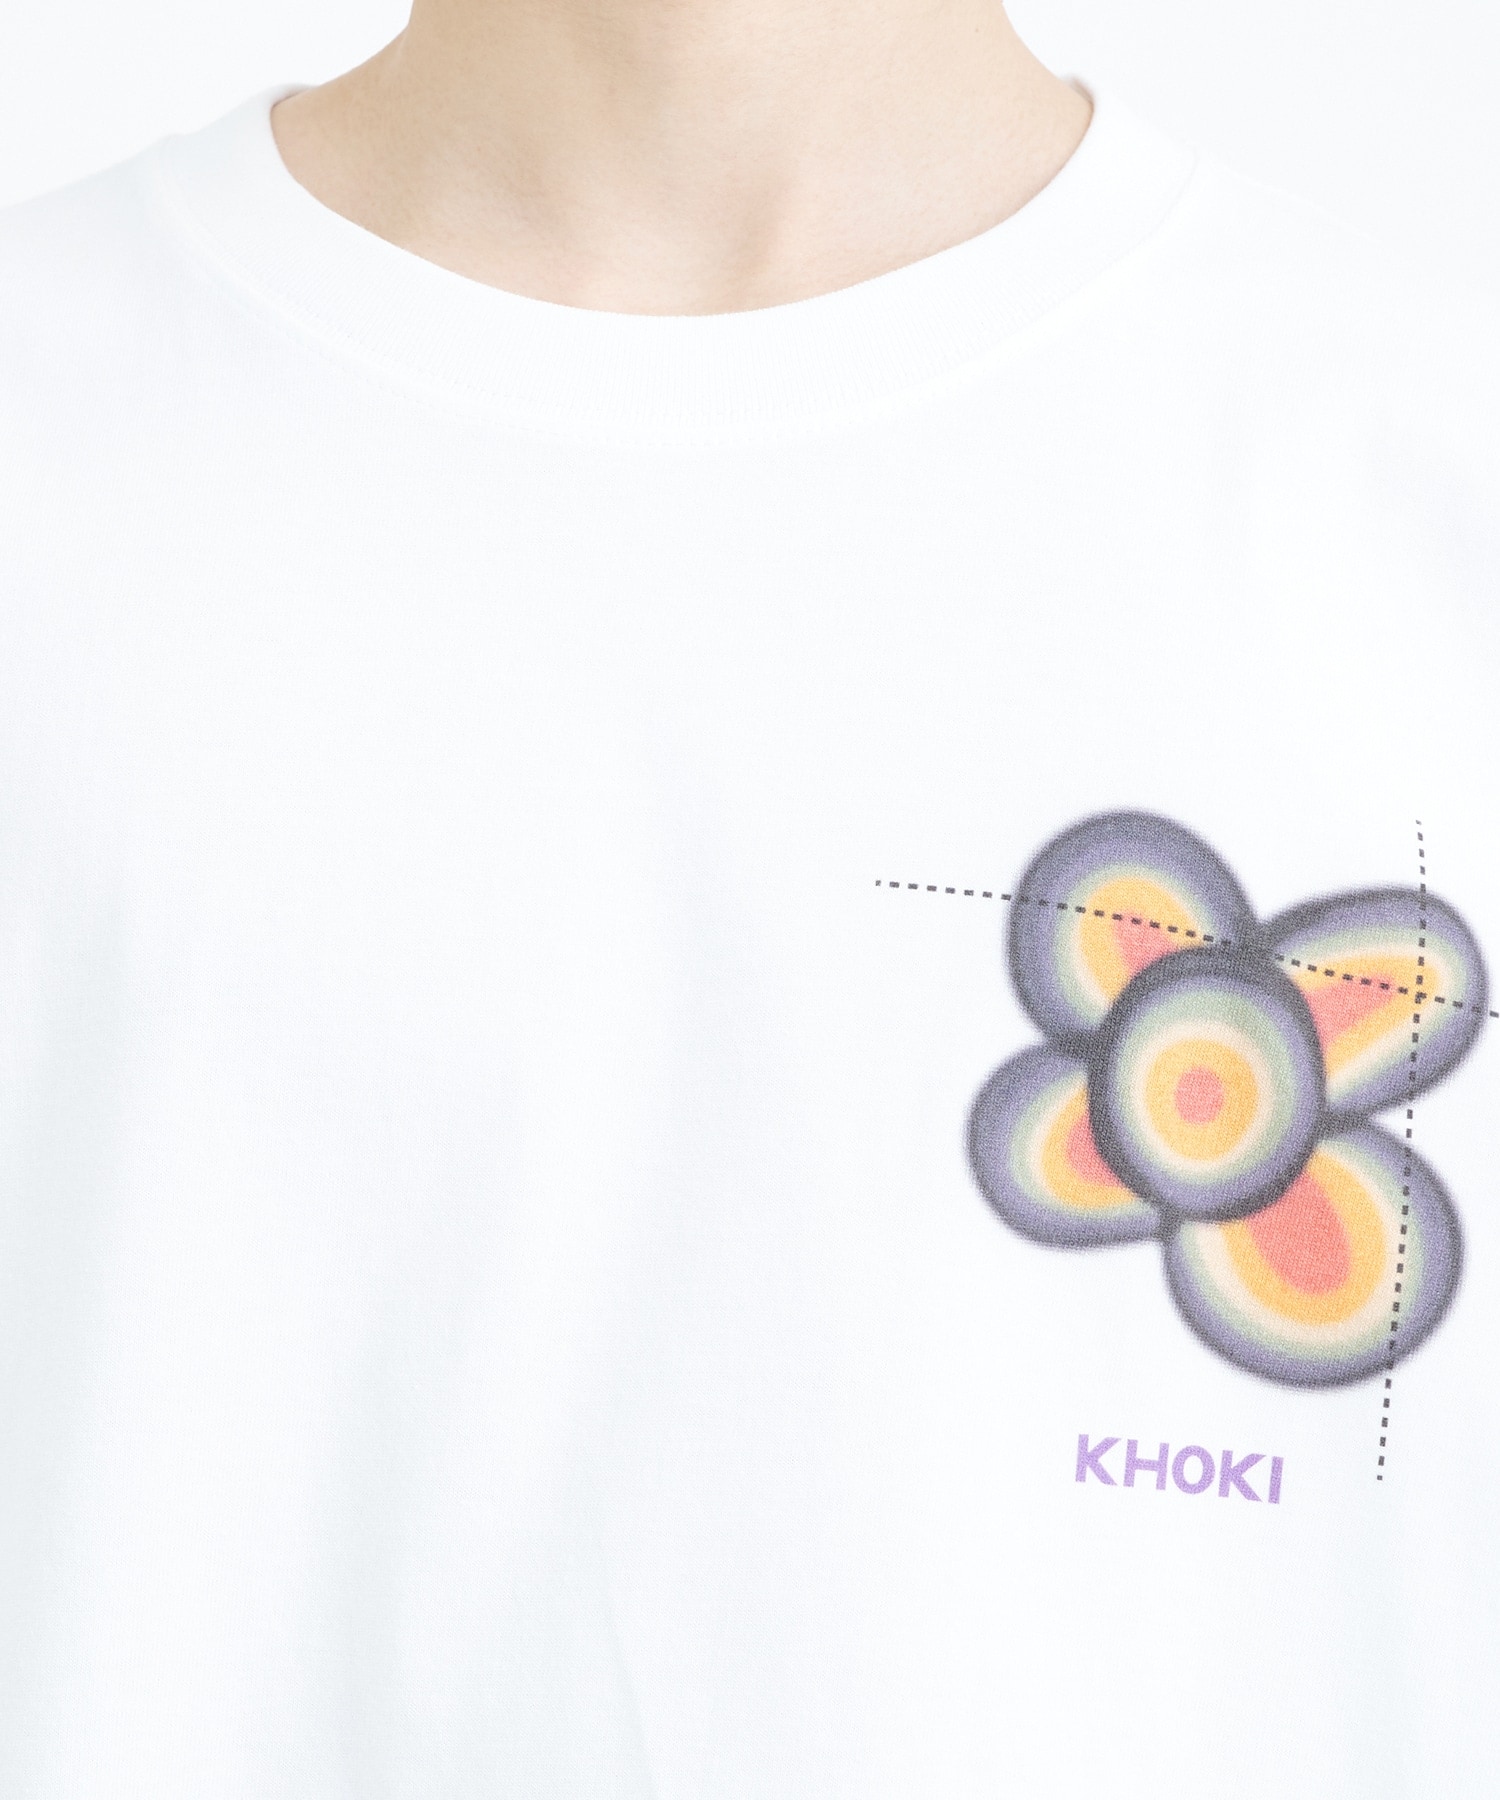 Where is the exhibition T-shirt KHOKI